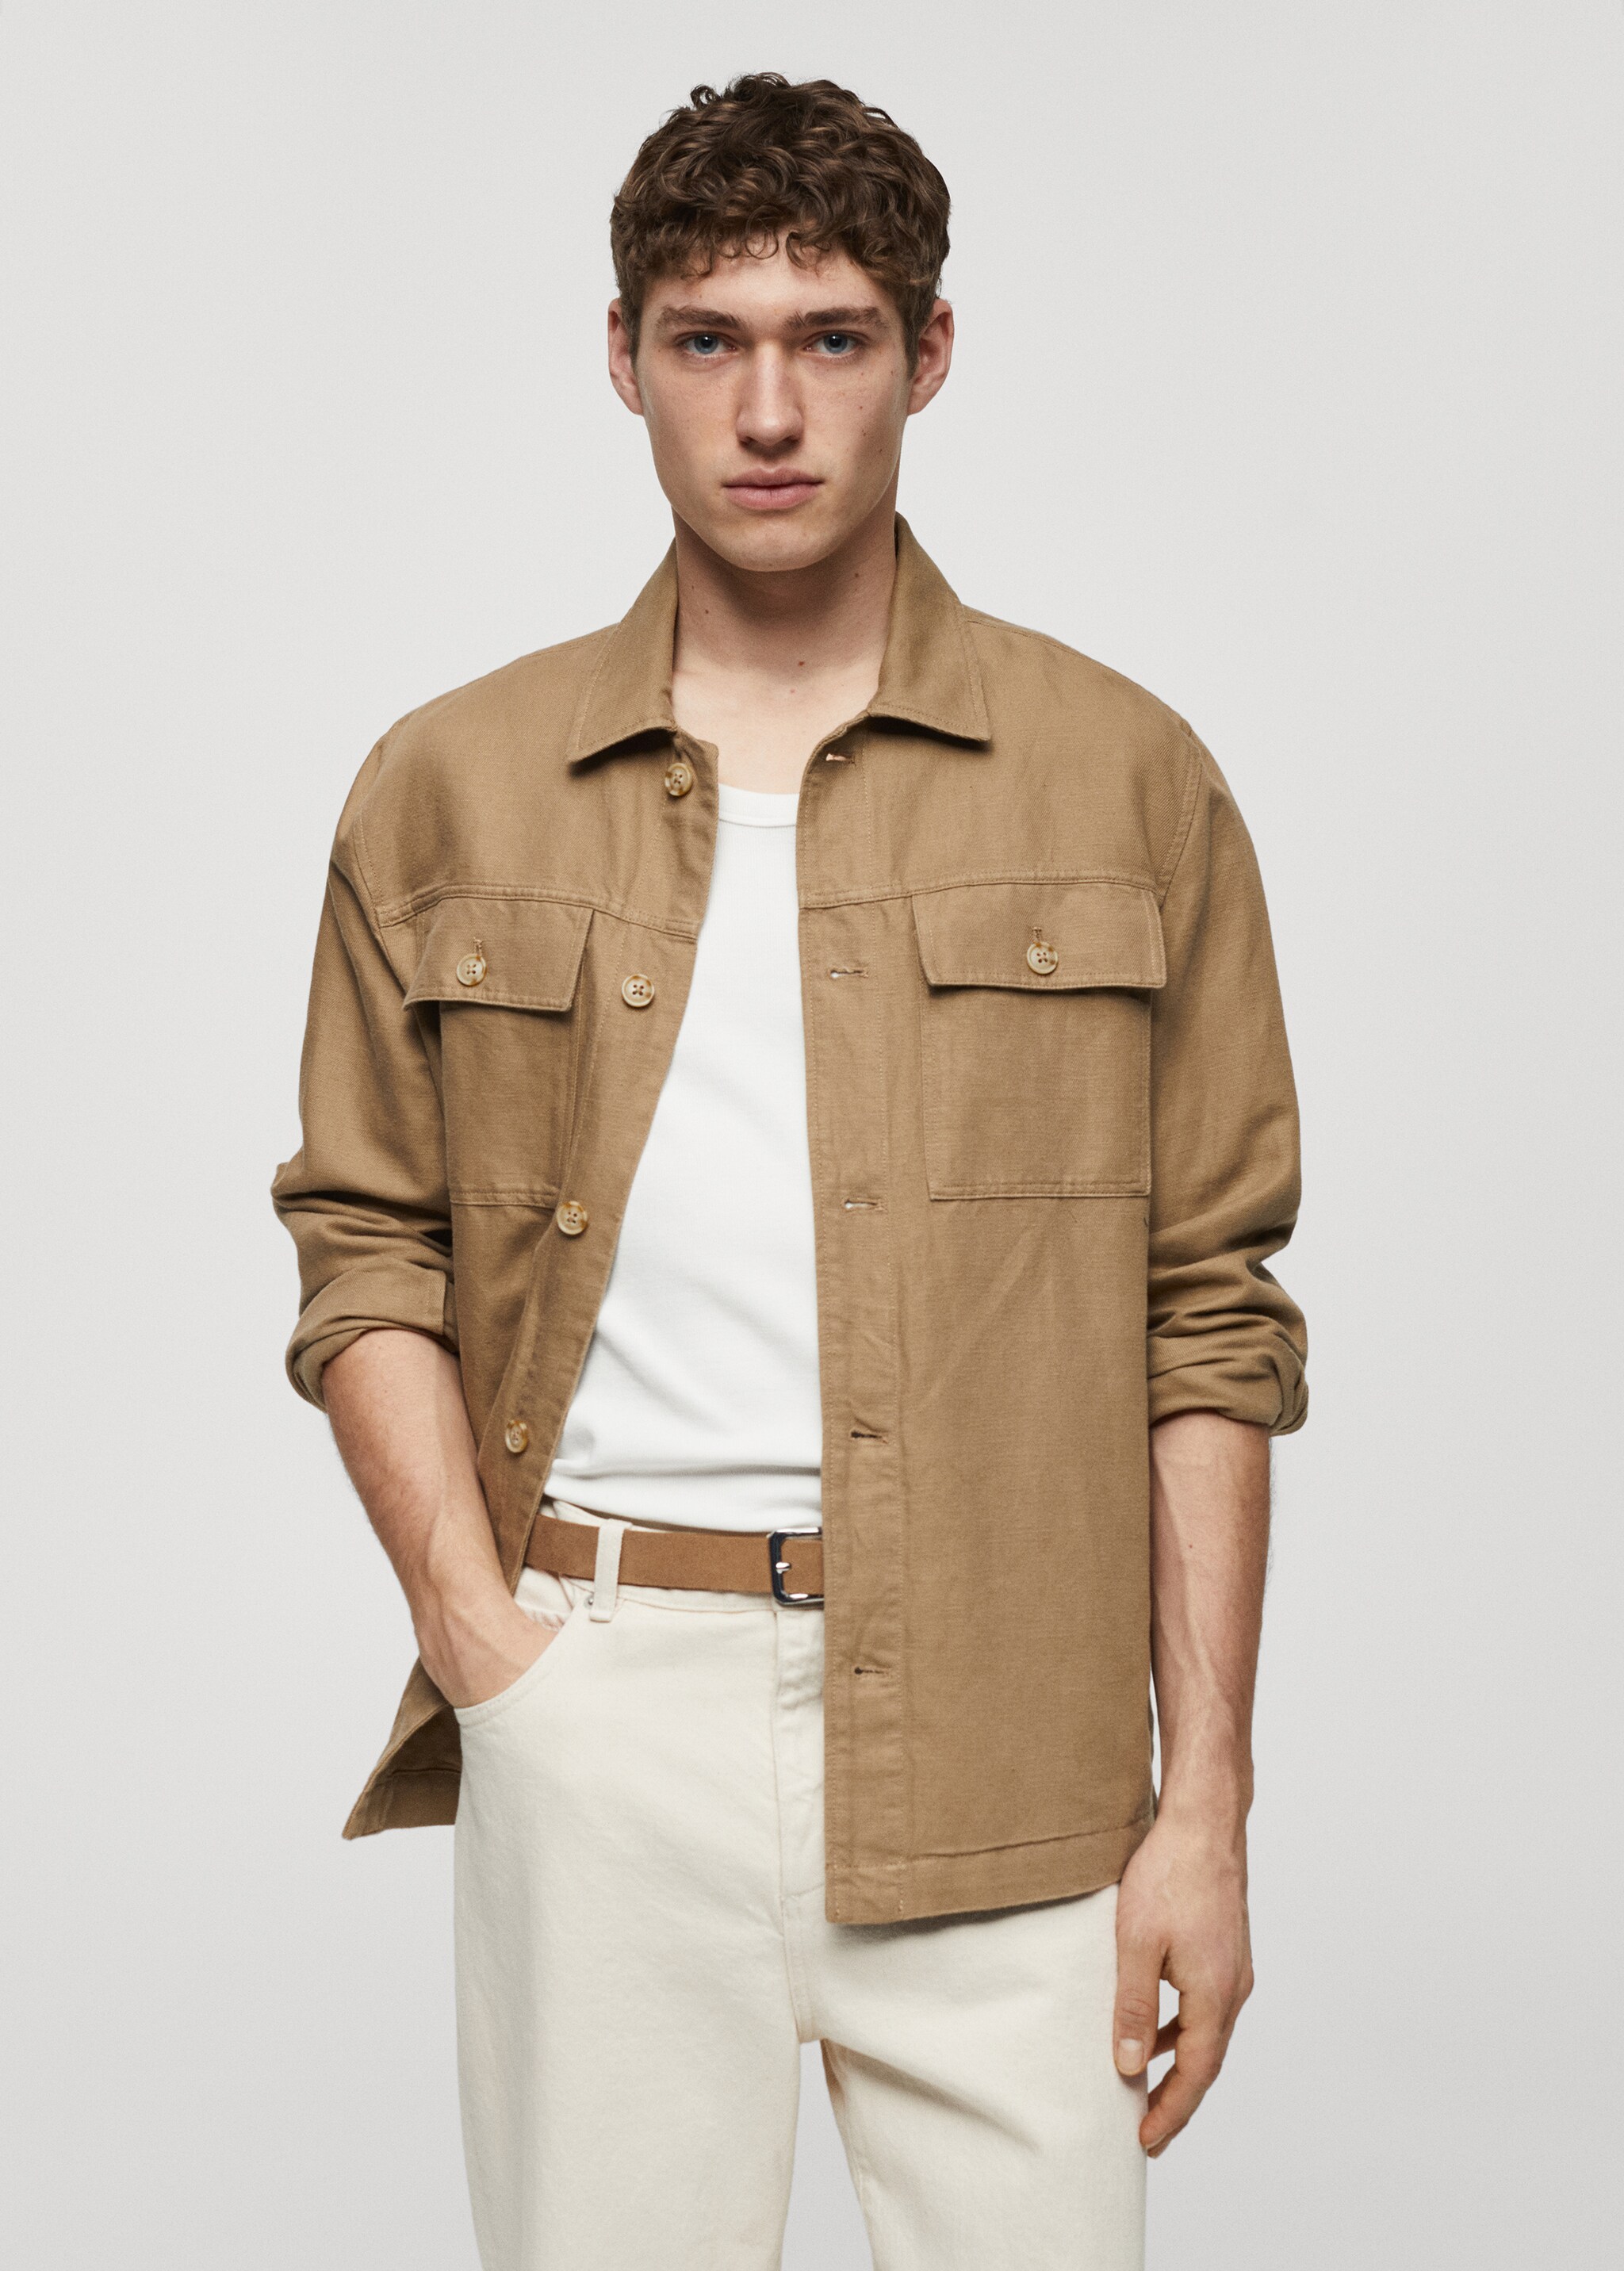 Linen cotton overshirt with pockets - Medium plane